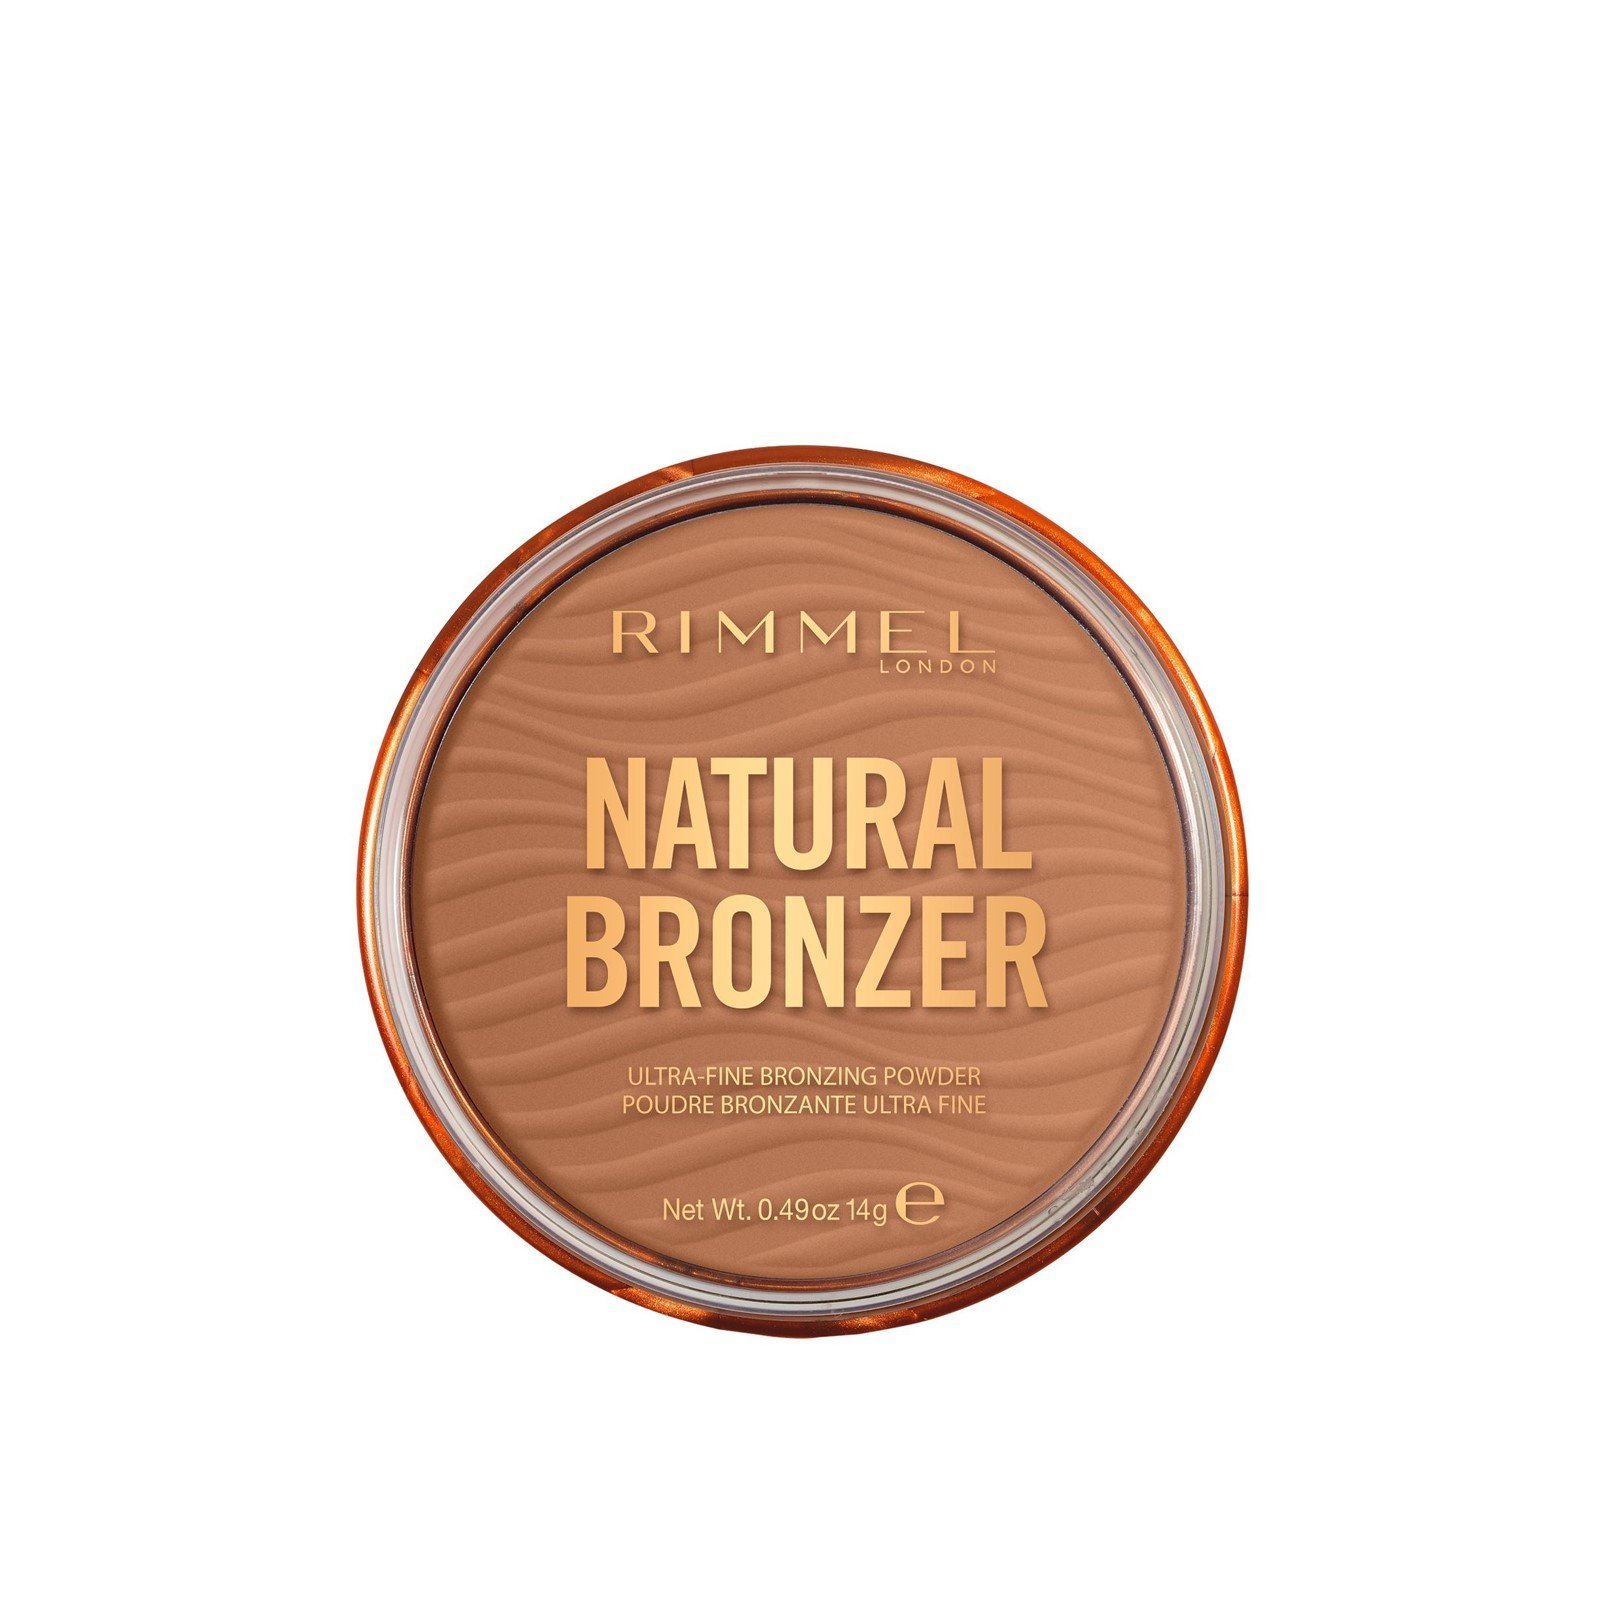 Buy Rimmel London Natural Bronzer Waterproof Powder SPF15 002 (0.49oz) USA